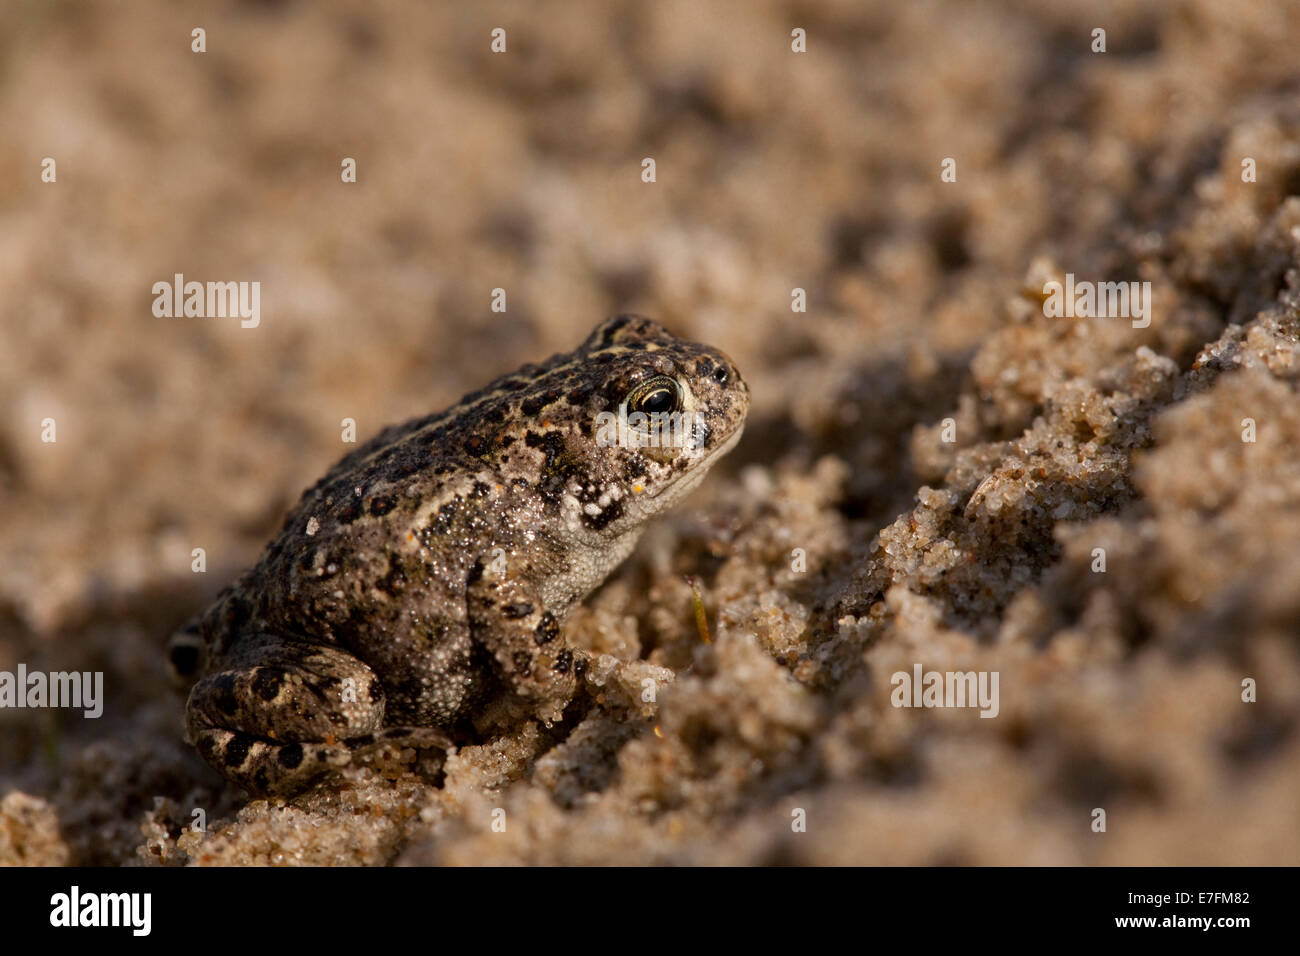 Natterjack toad (Epidalea calamita / Bufo calamita) juvenile in the sand Stock Photo